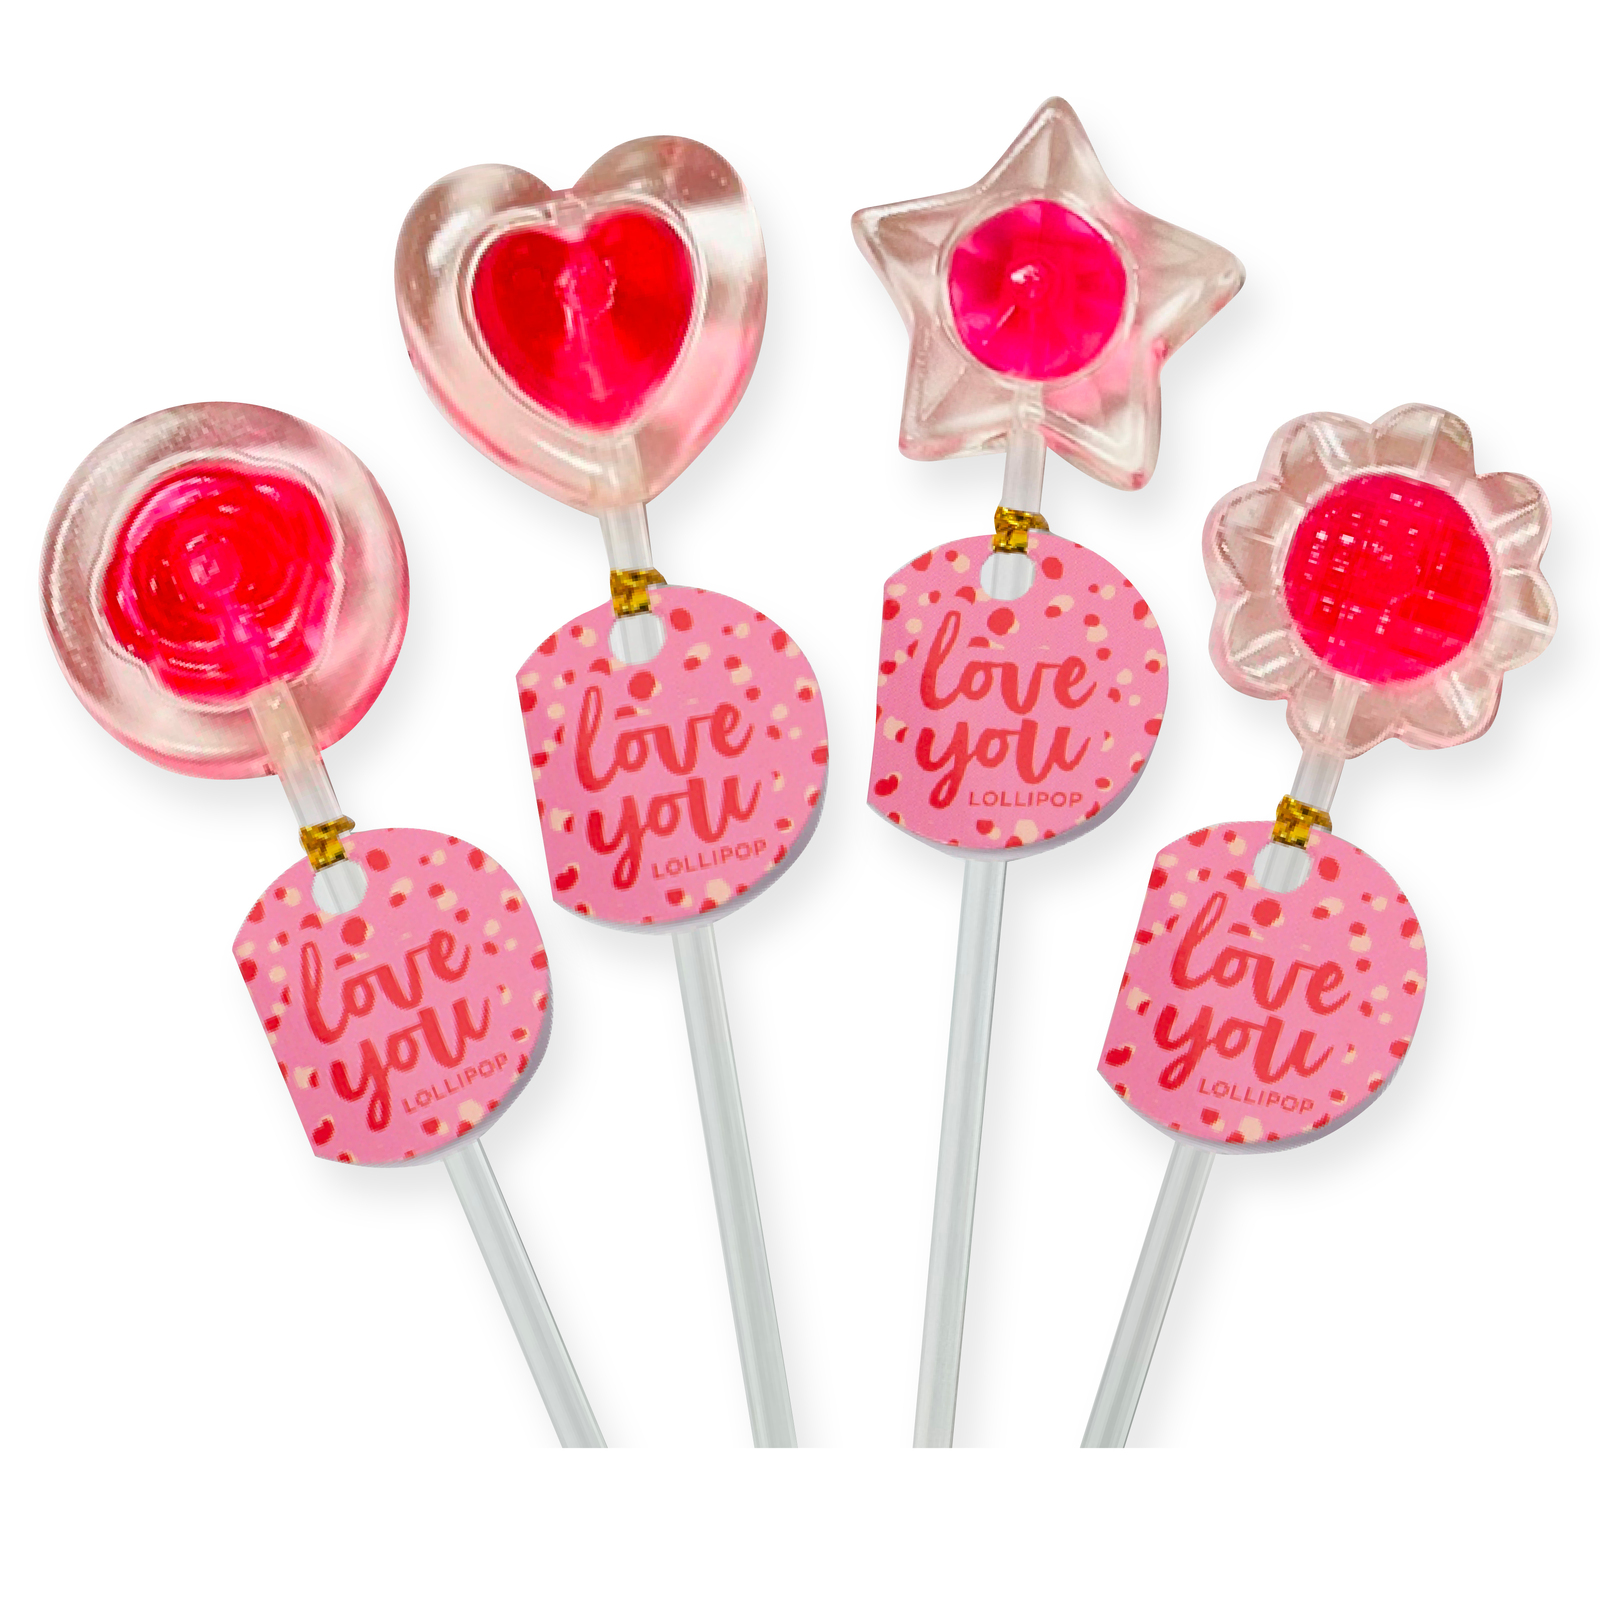 Love You Lollipop - Pack of 12 ($1.20 ea)